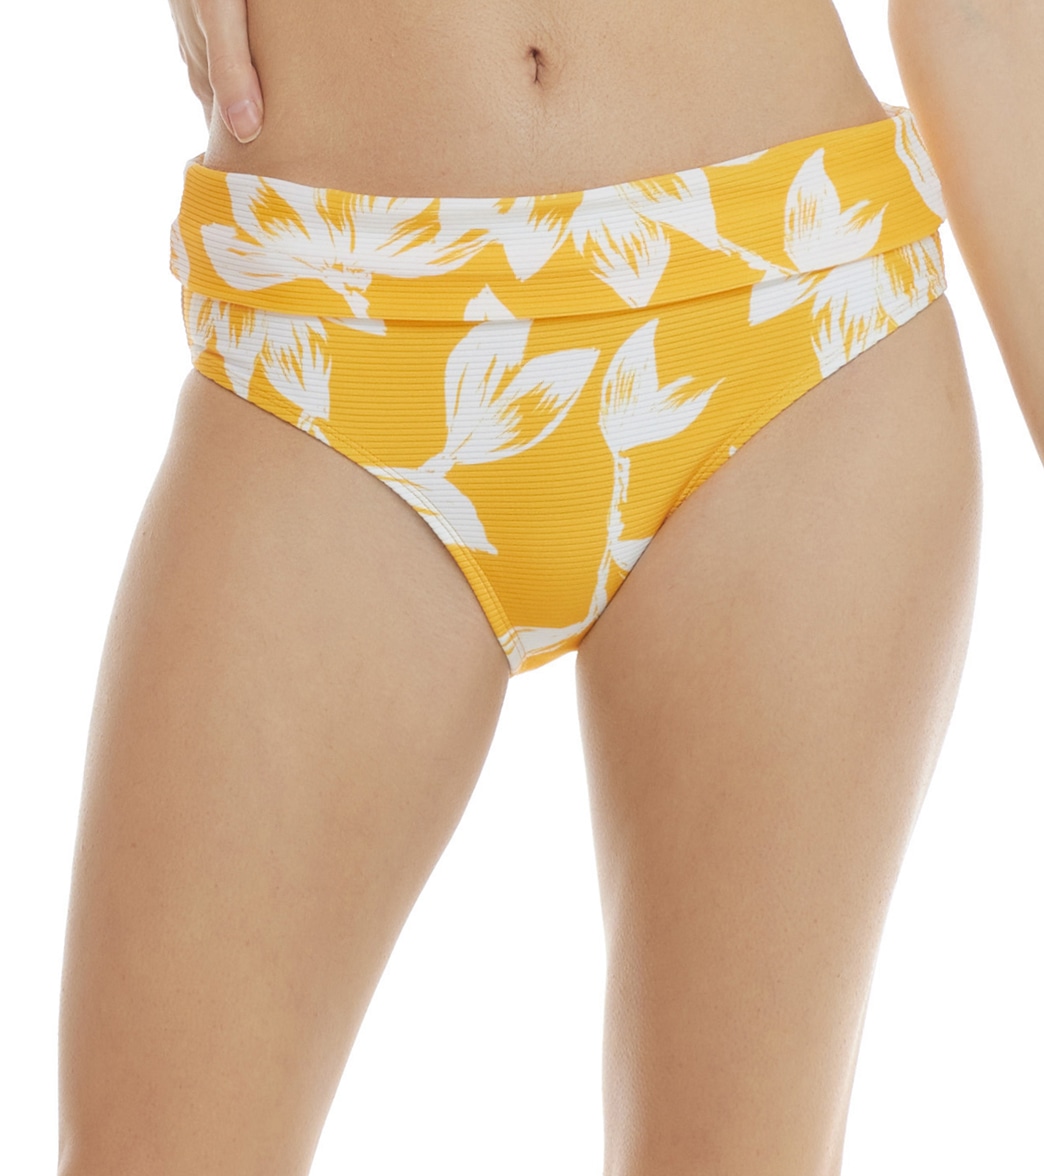 Skye Women's Anguilla Mid Waist Foldover Bikini Bottom - Sunflower Medium - Swimoutlet.com